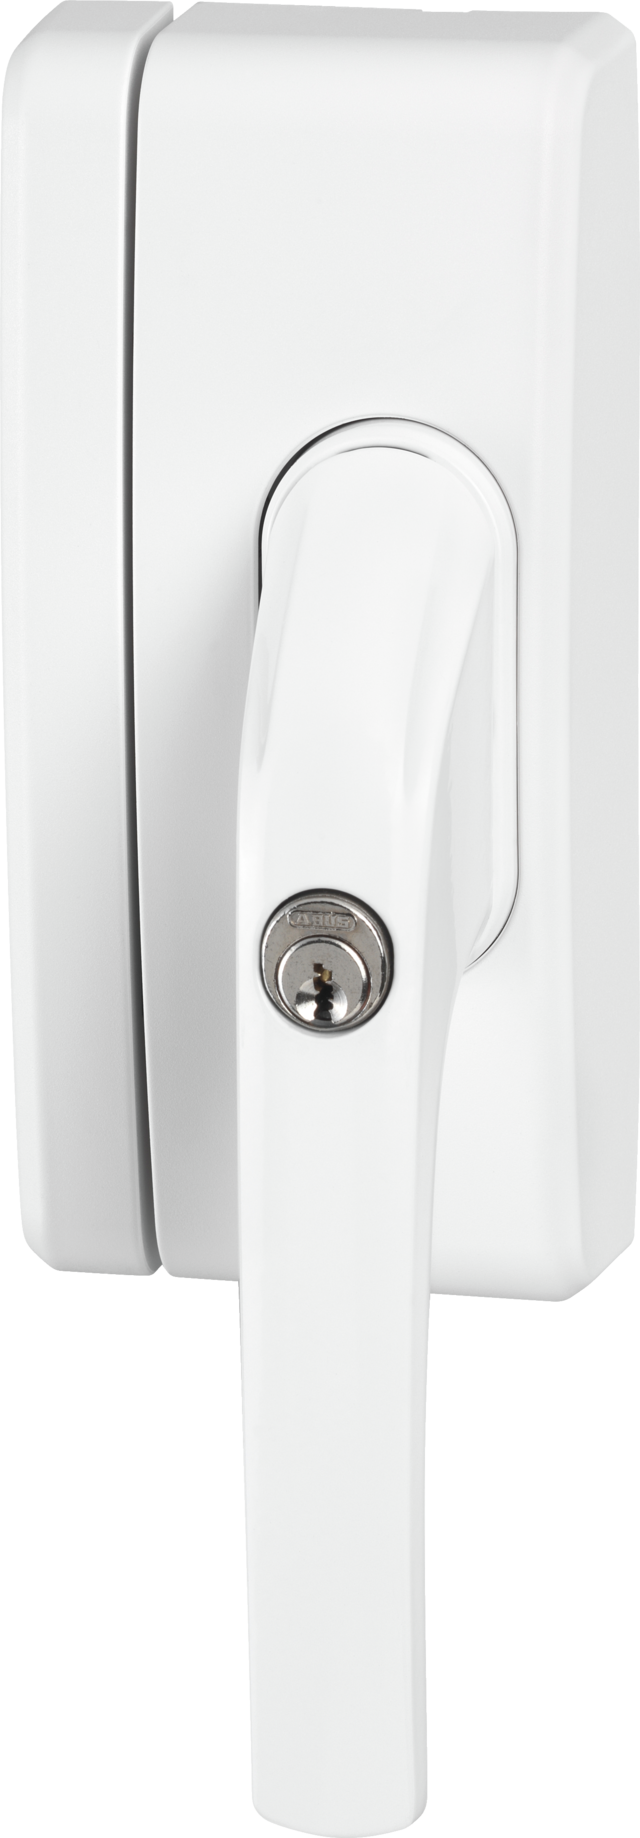 Secvest wireless window handle lock FO 400 E - AL0089 (white) front view left